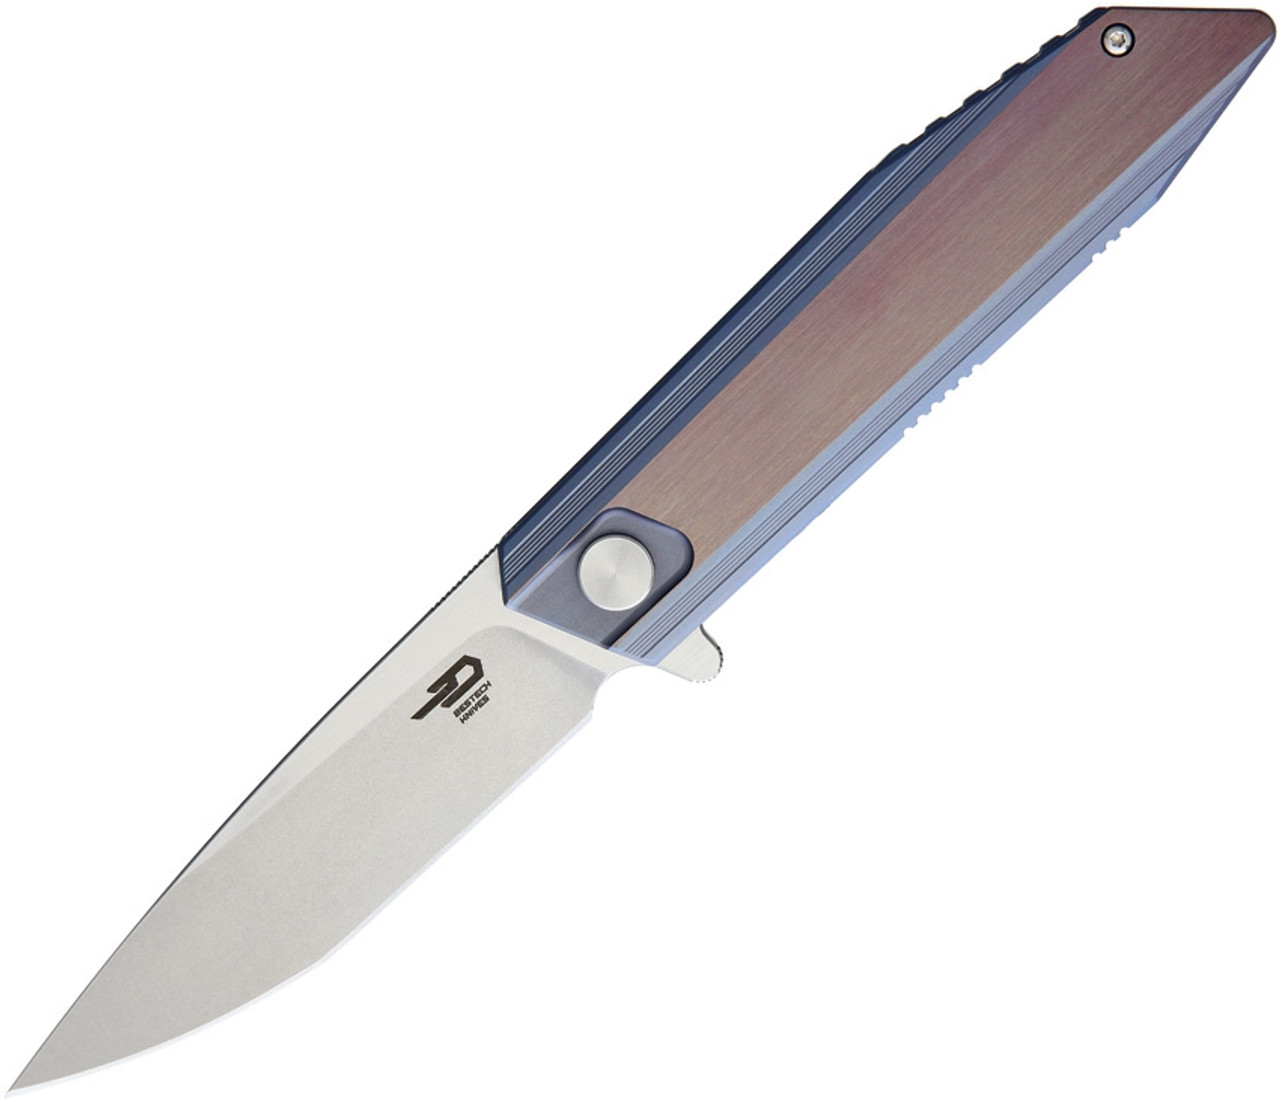 Bestech BT1701D Shogun, 3.54" CPM-S35VN Stonewash Plain Blade, Blue/Bronze Titanium Handle